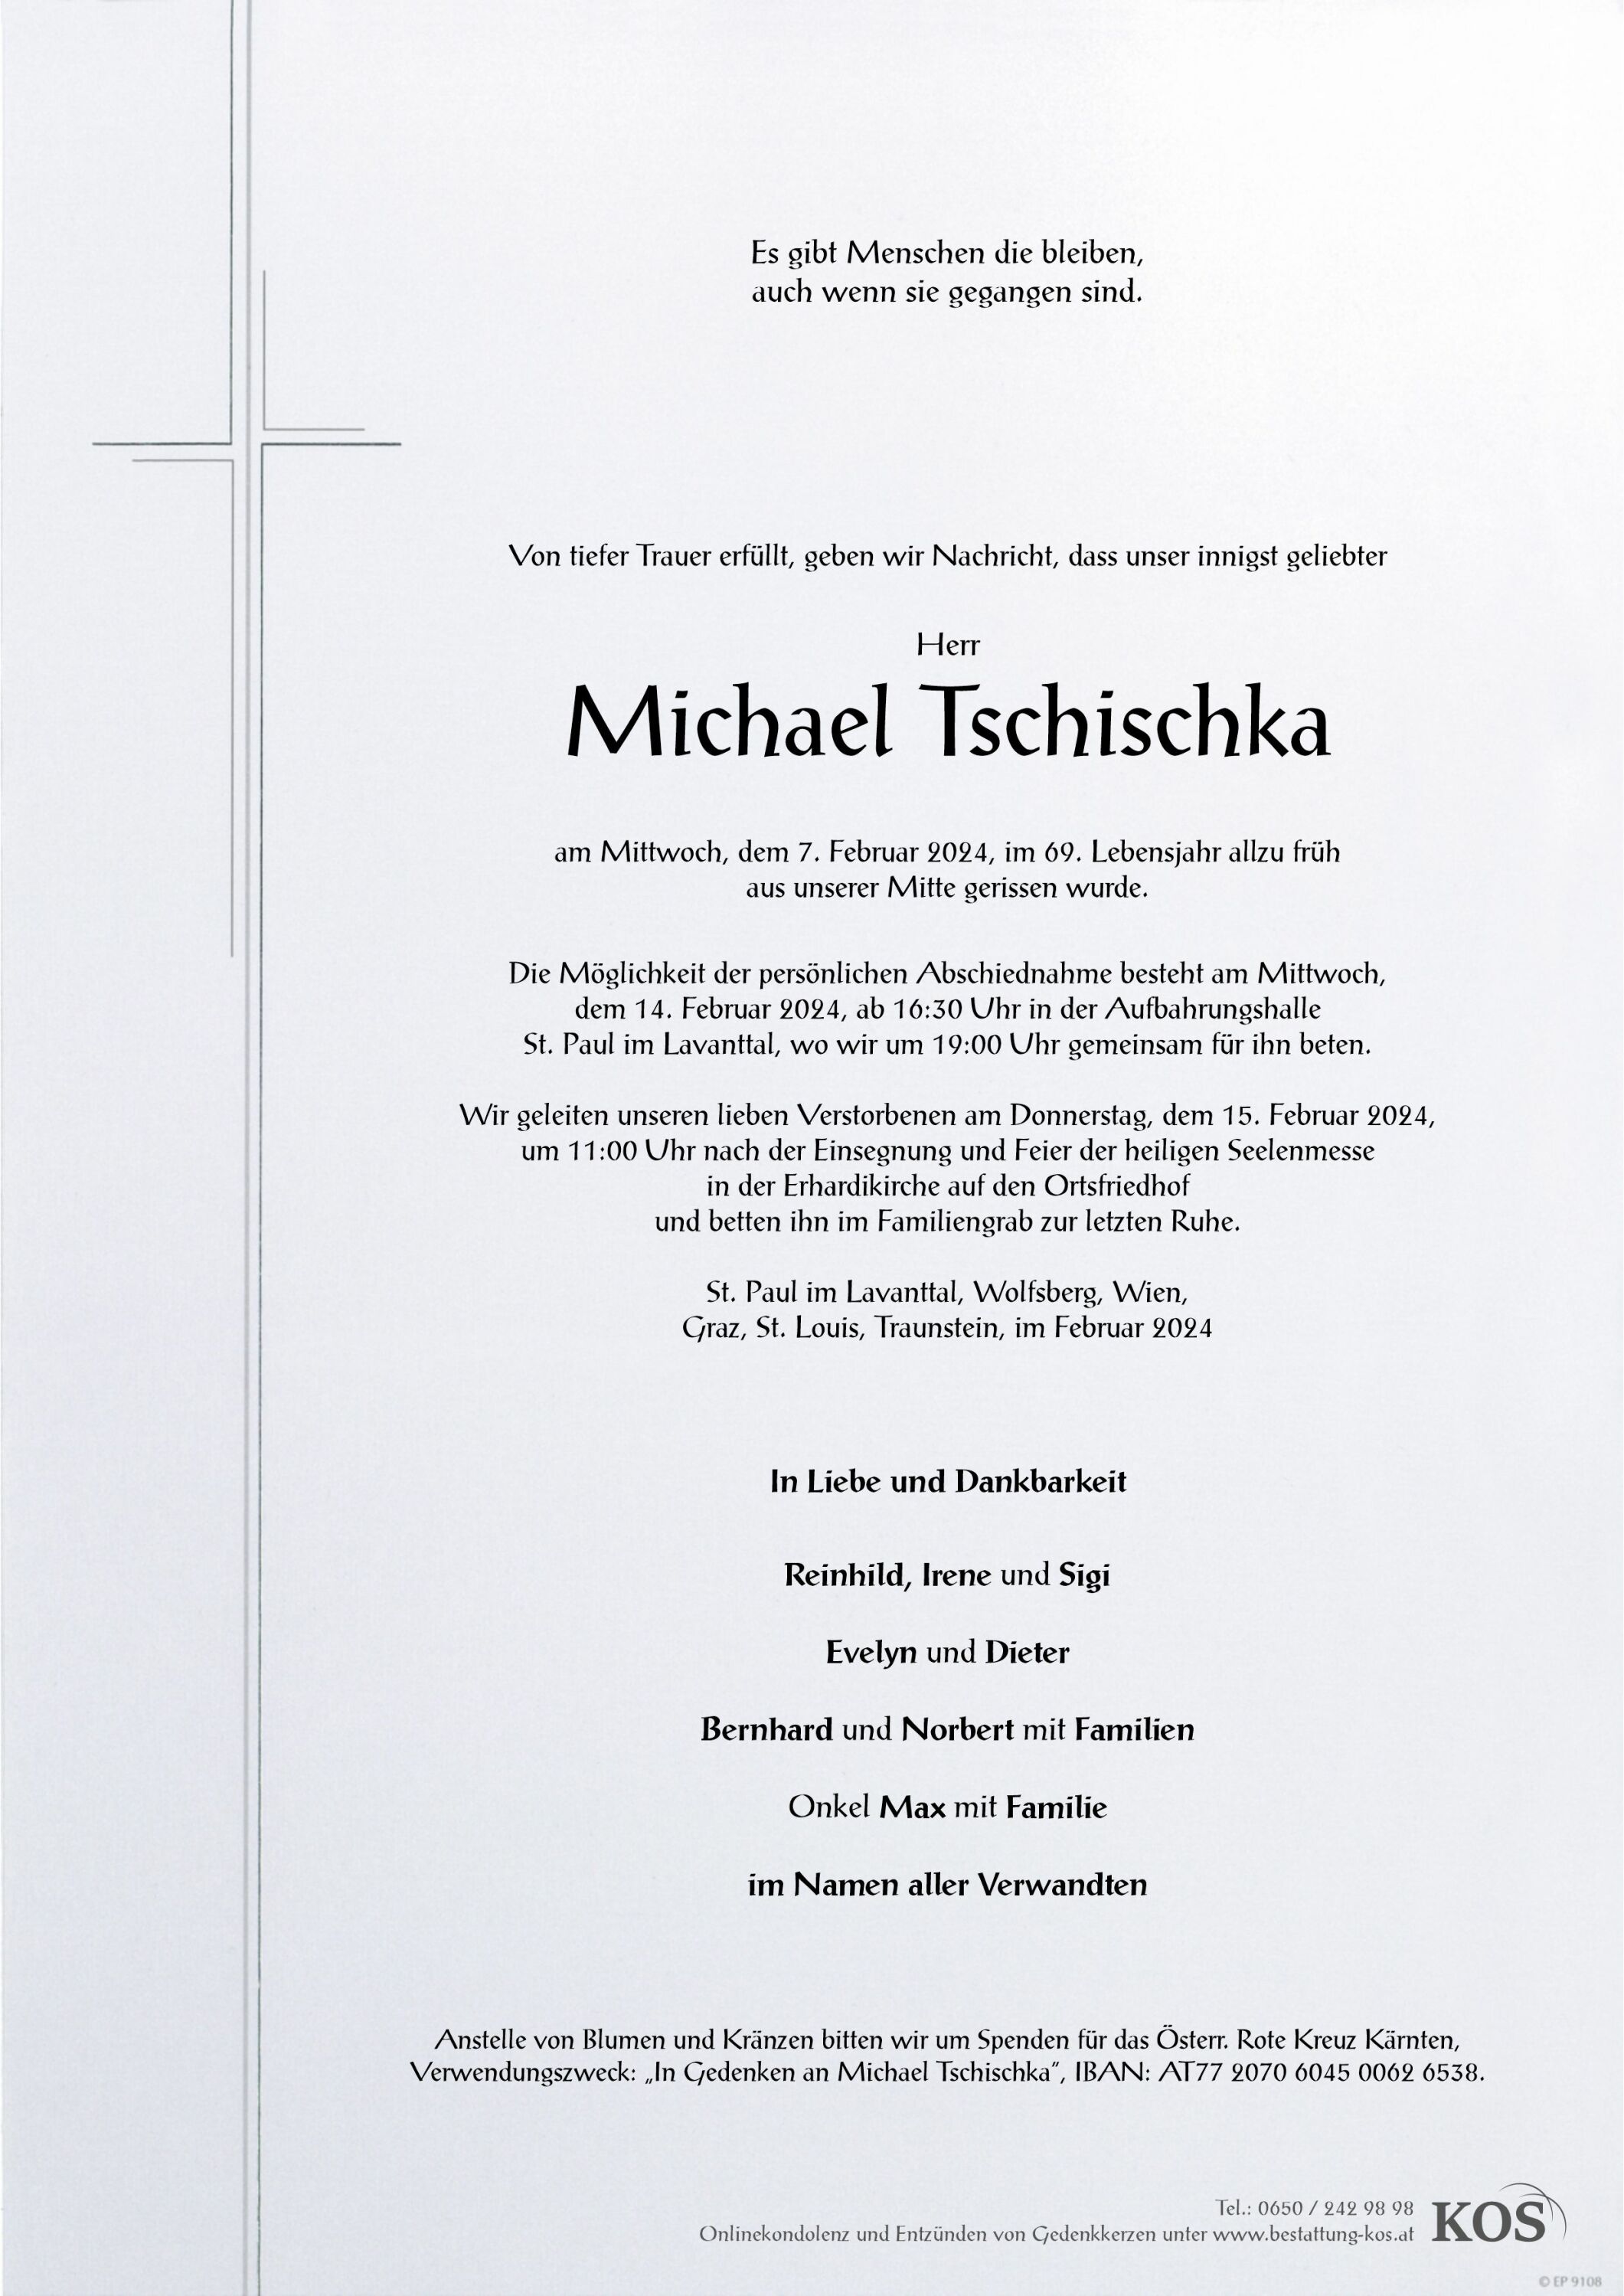 Michael Tschischka